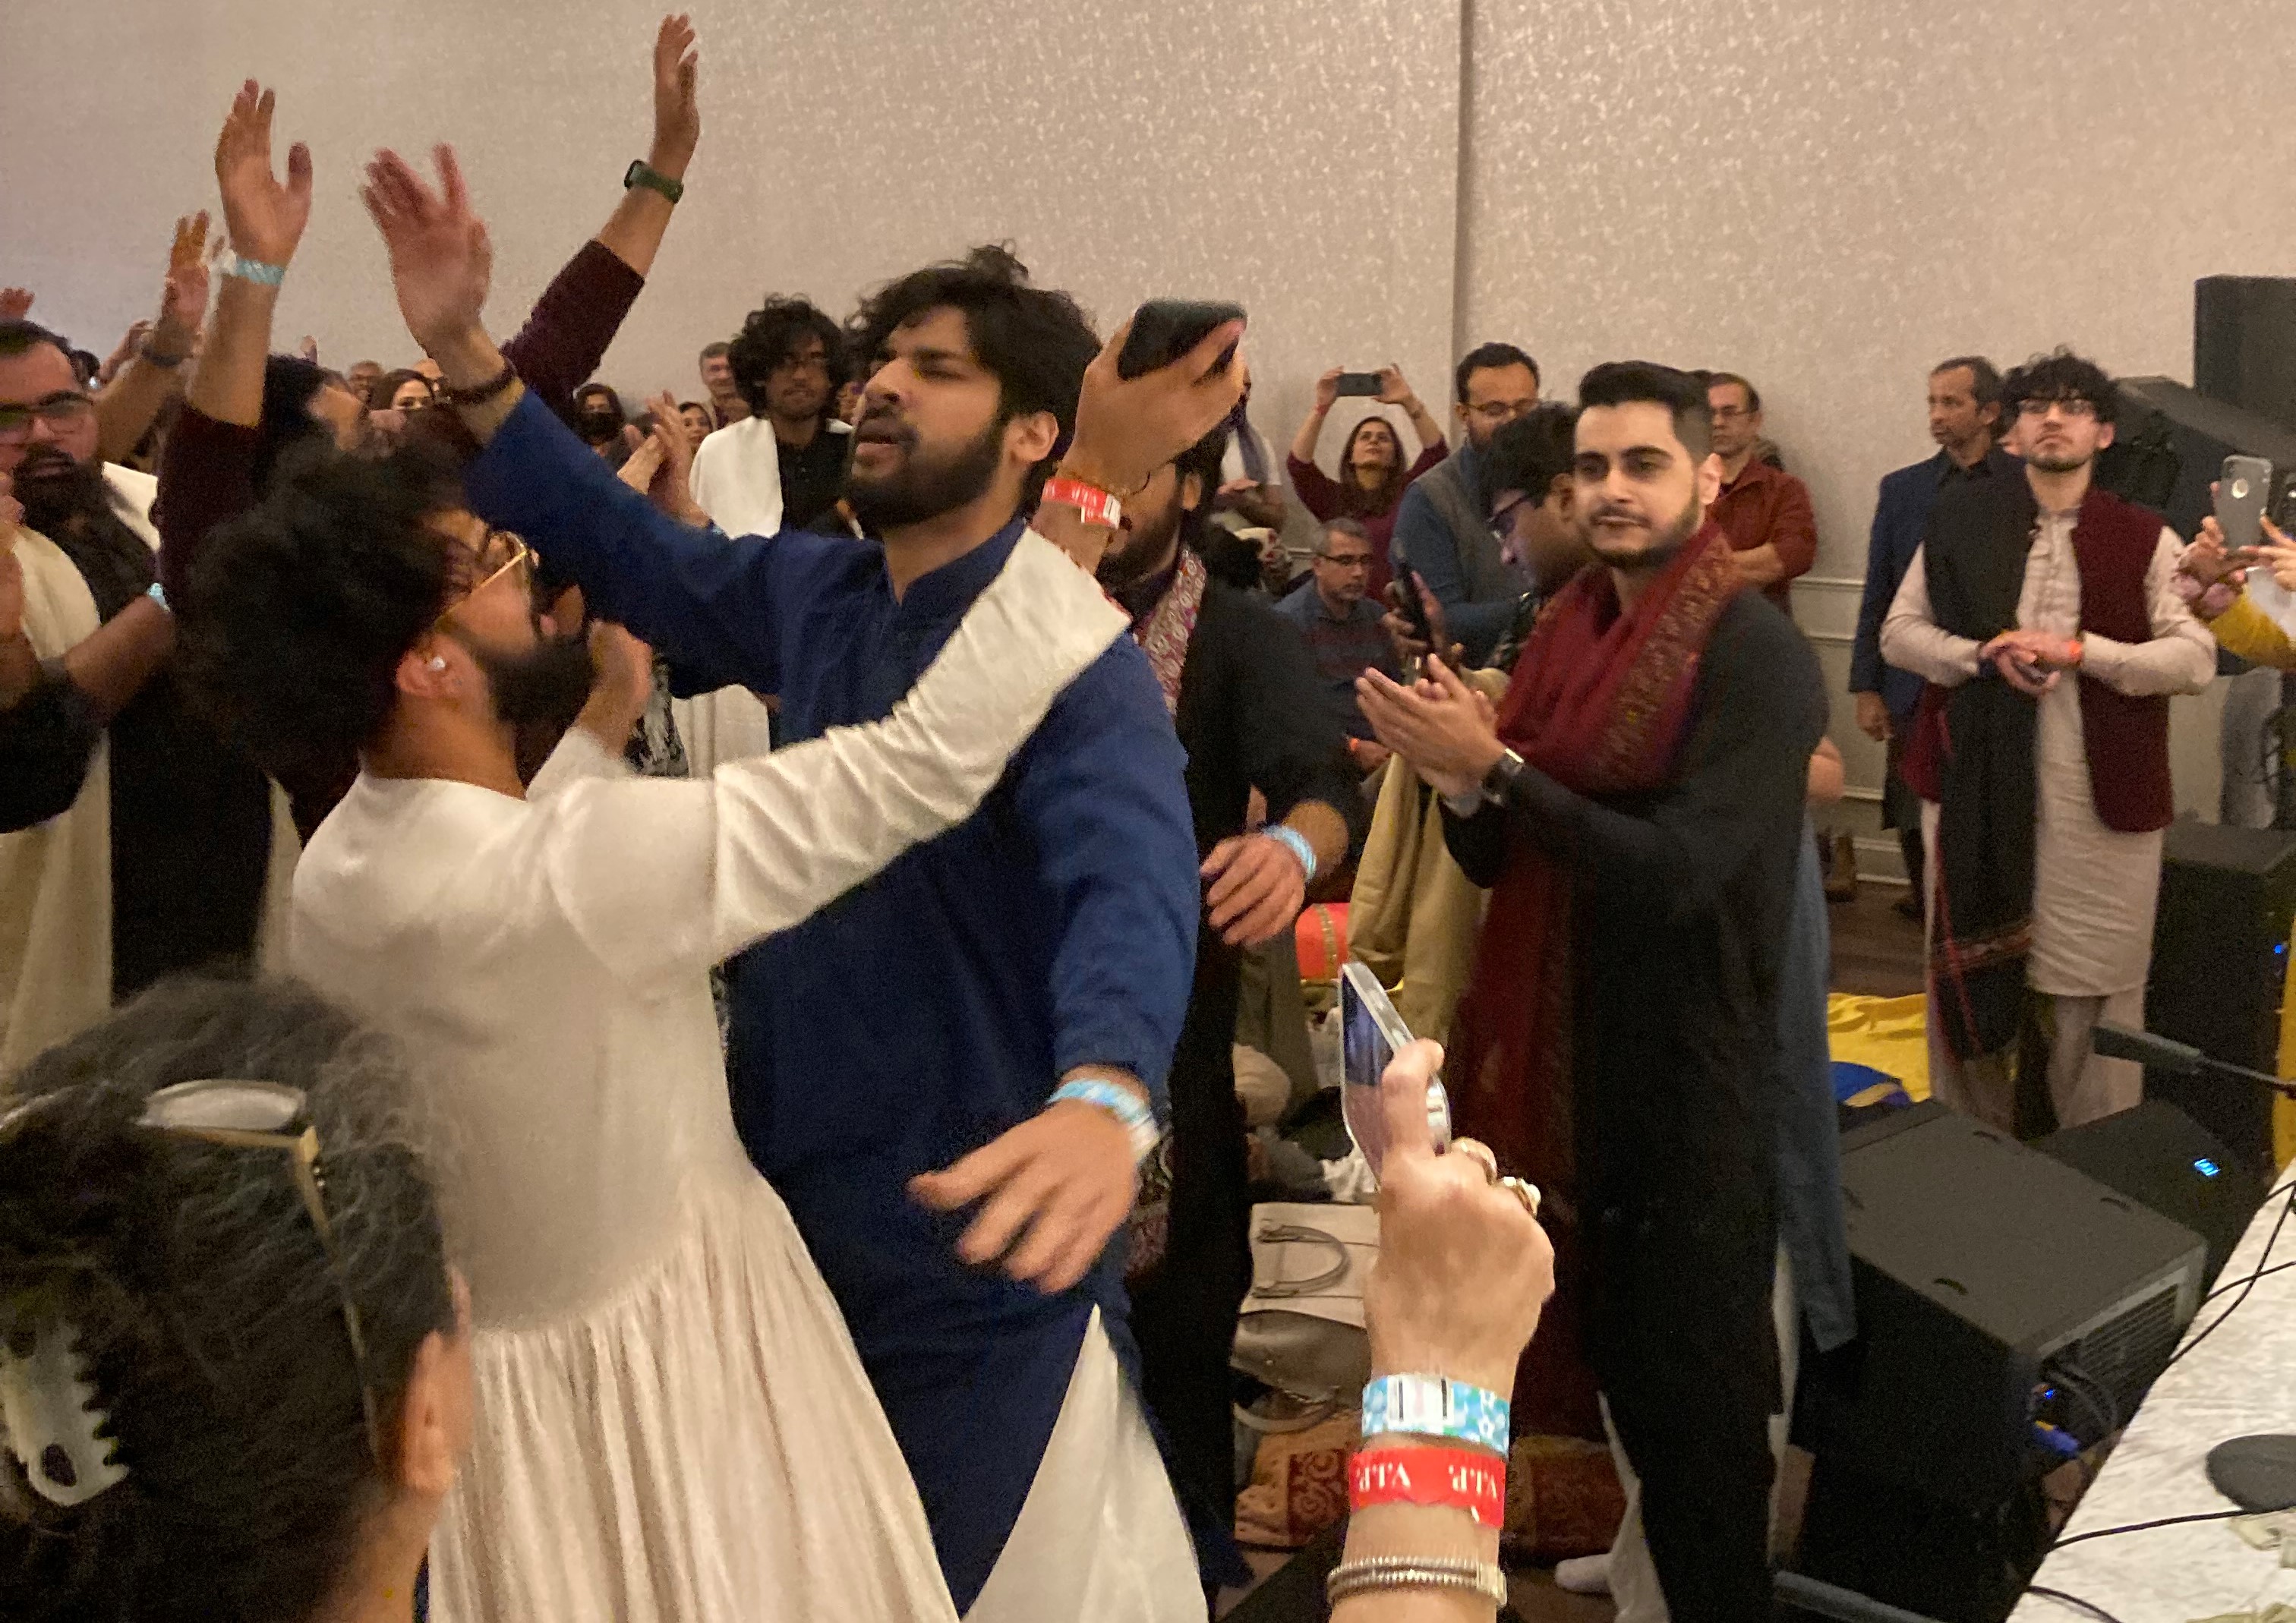 Qawwali ends with dhammal - musical ecstasy (Photos: Beena Sarwar)